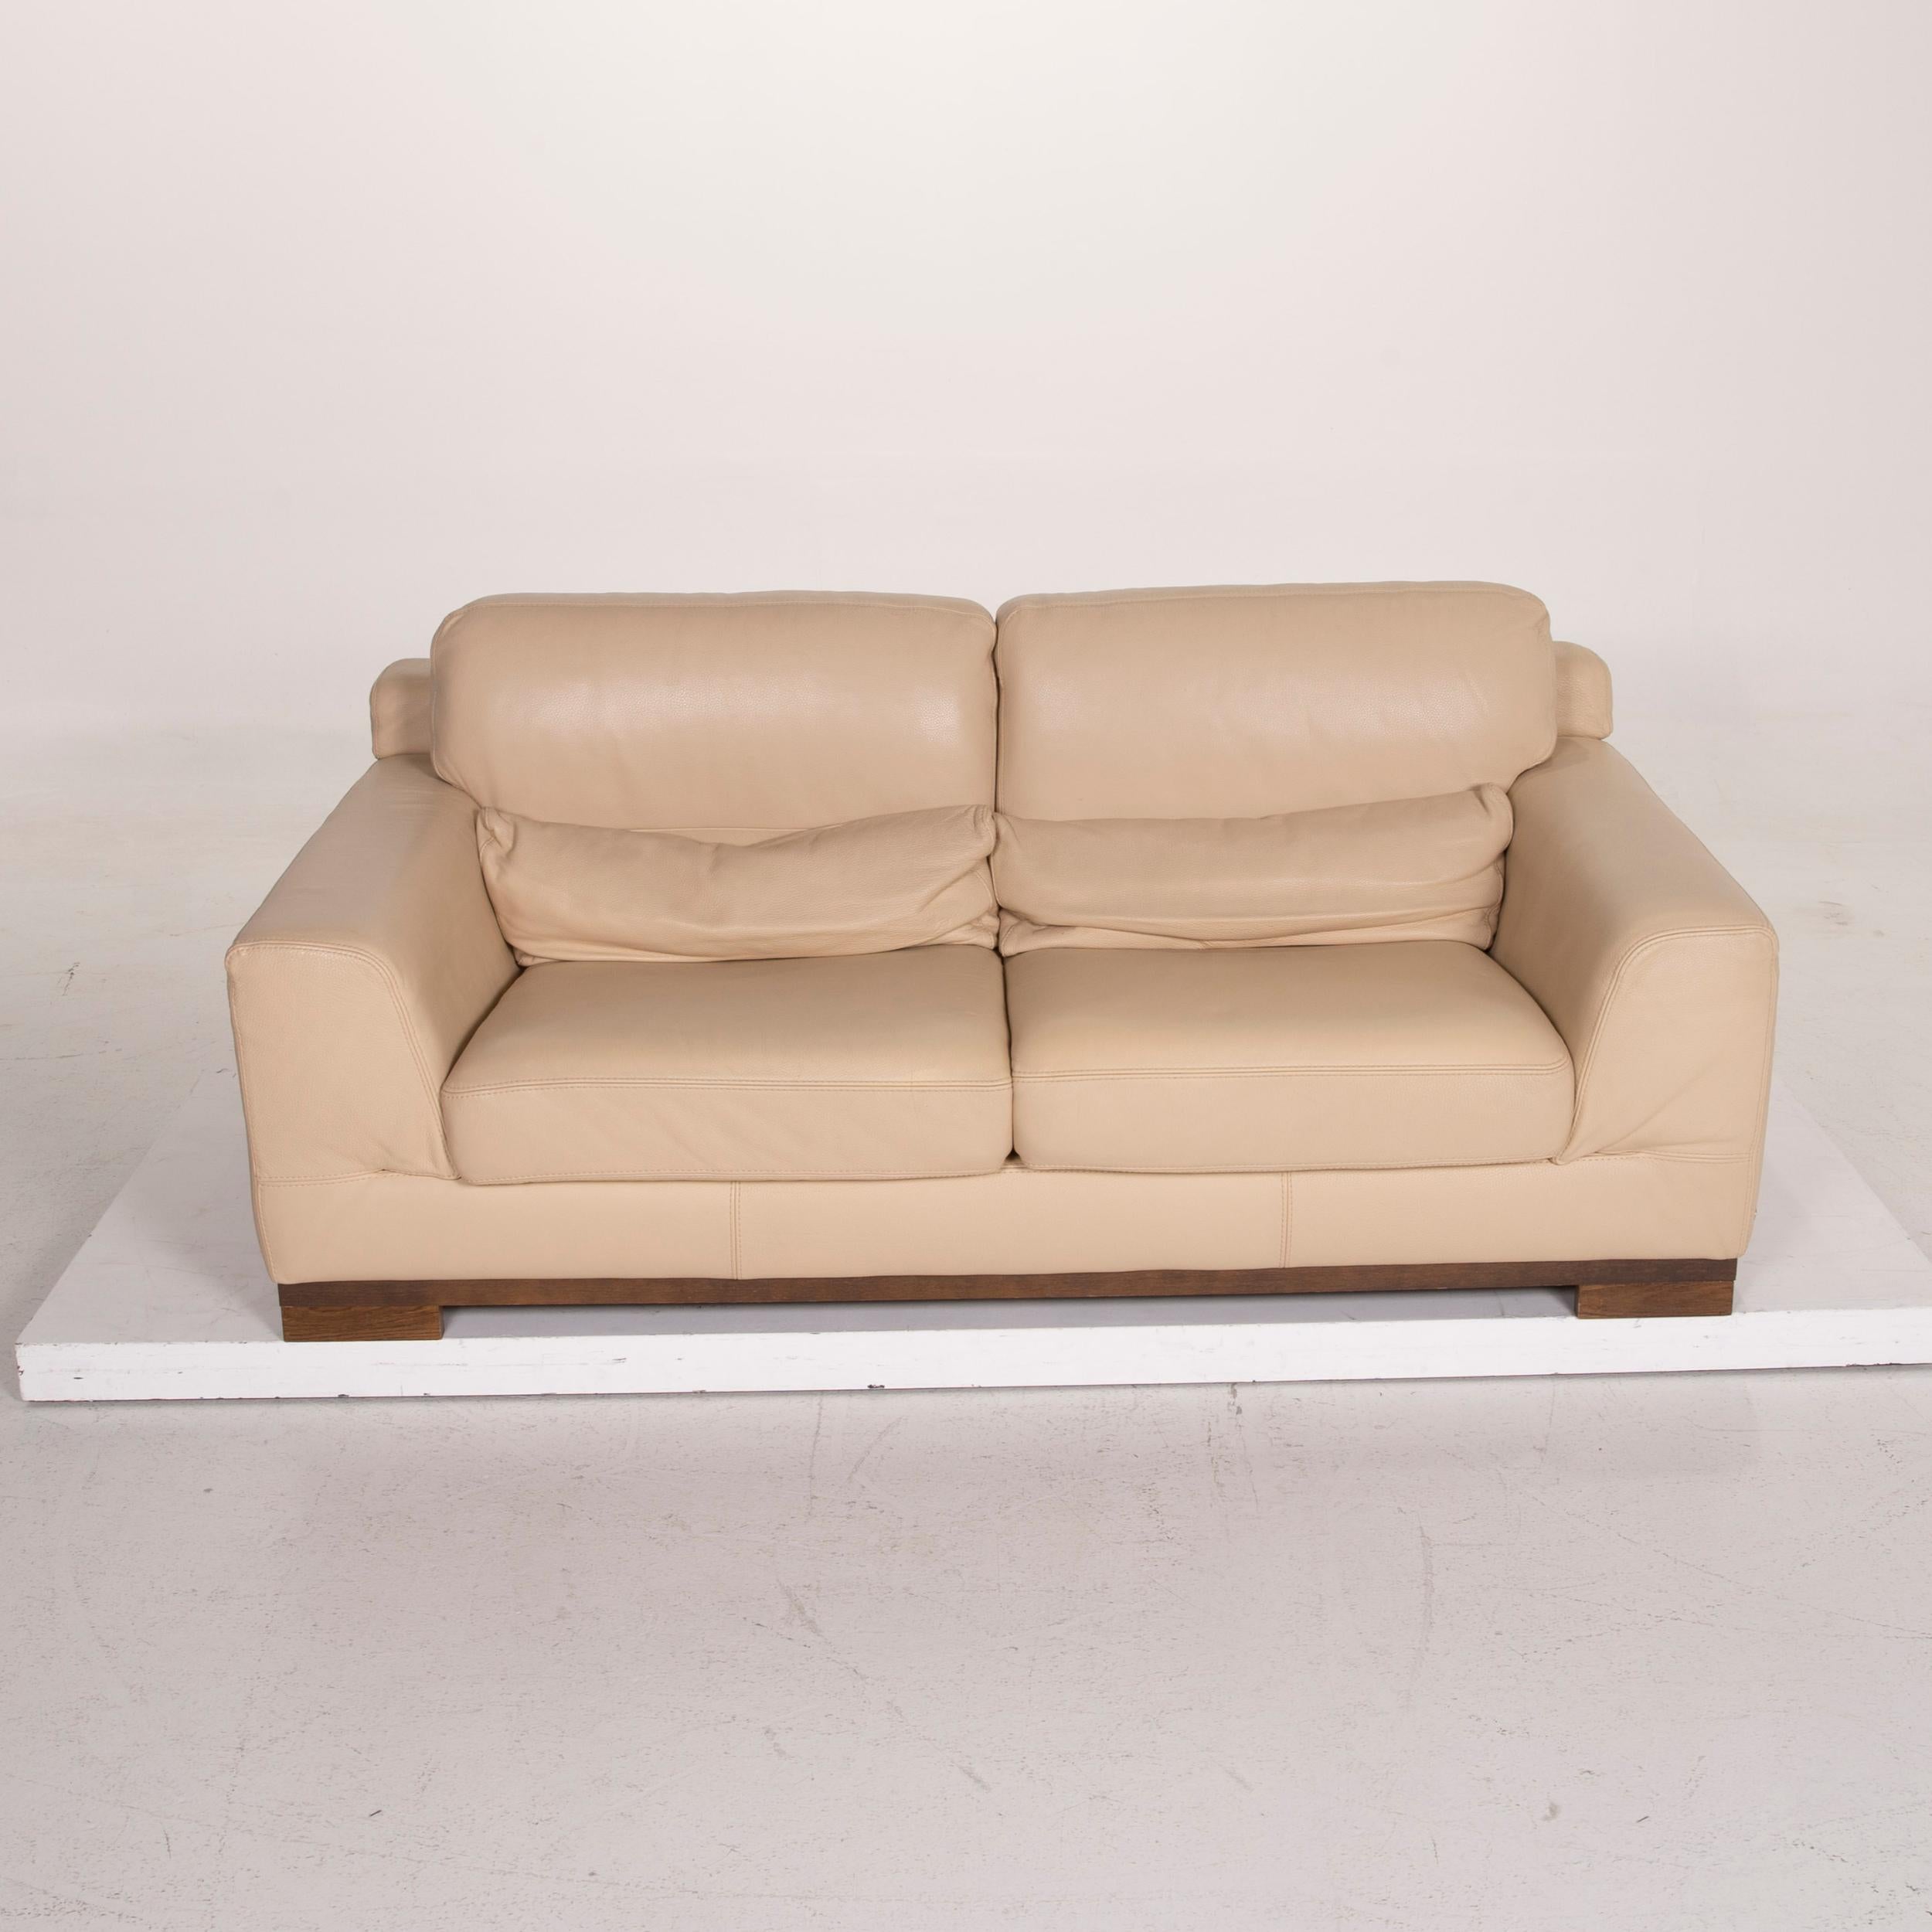 Natuzzi 2085 Leather Sofa Beige Two-Seat In Good Condition For Sale In Cologne, DE